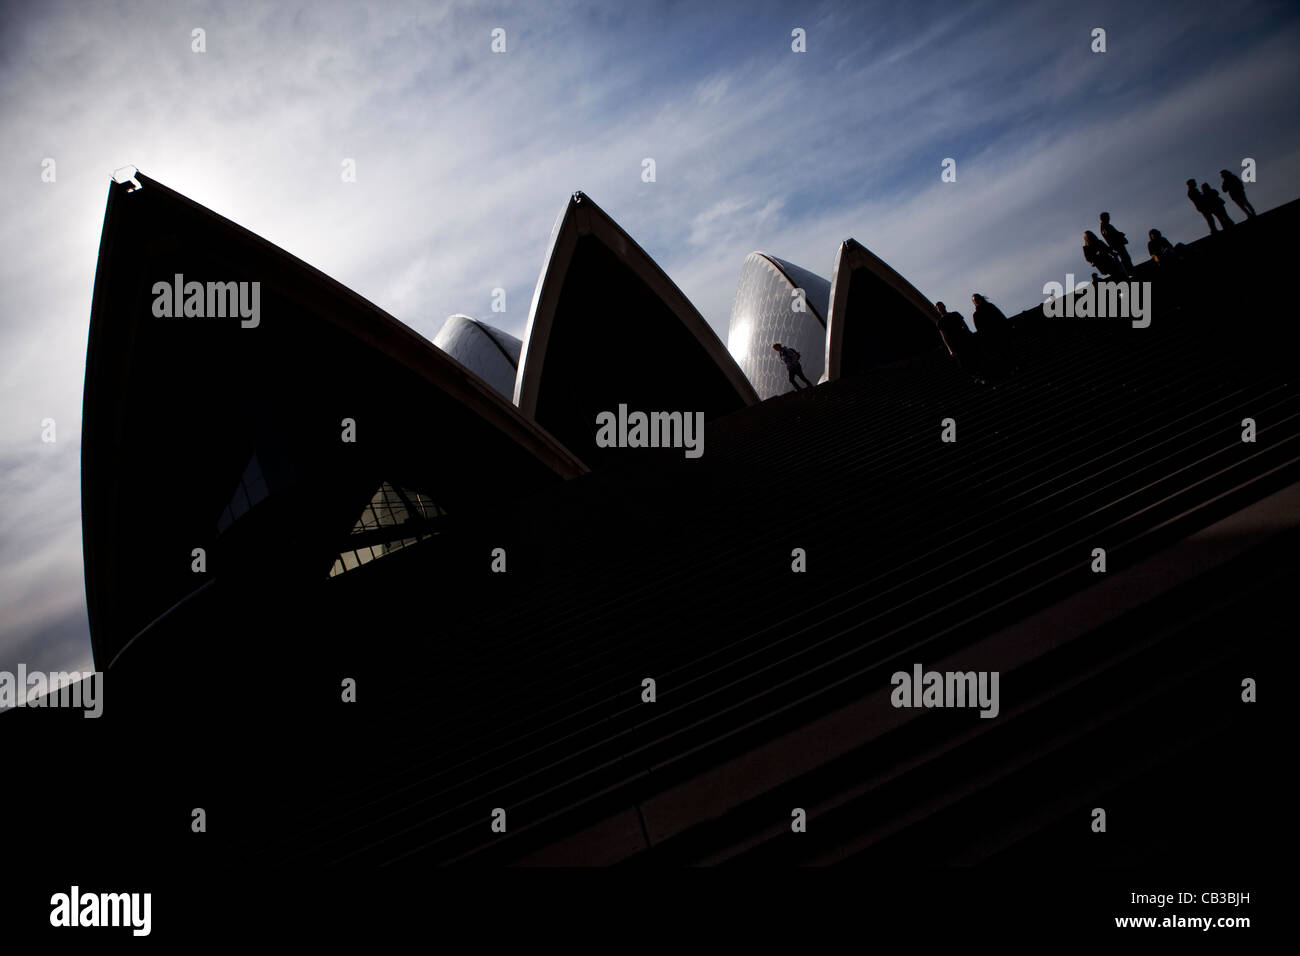 Sydney, Australia - 6 July 2009; The iconic Sydney Opera House. Silhouette of the roofline of the Sydney Opera House. Stock Photo